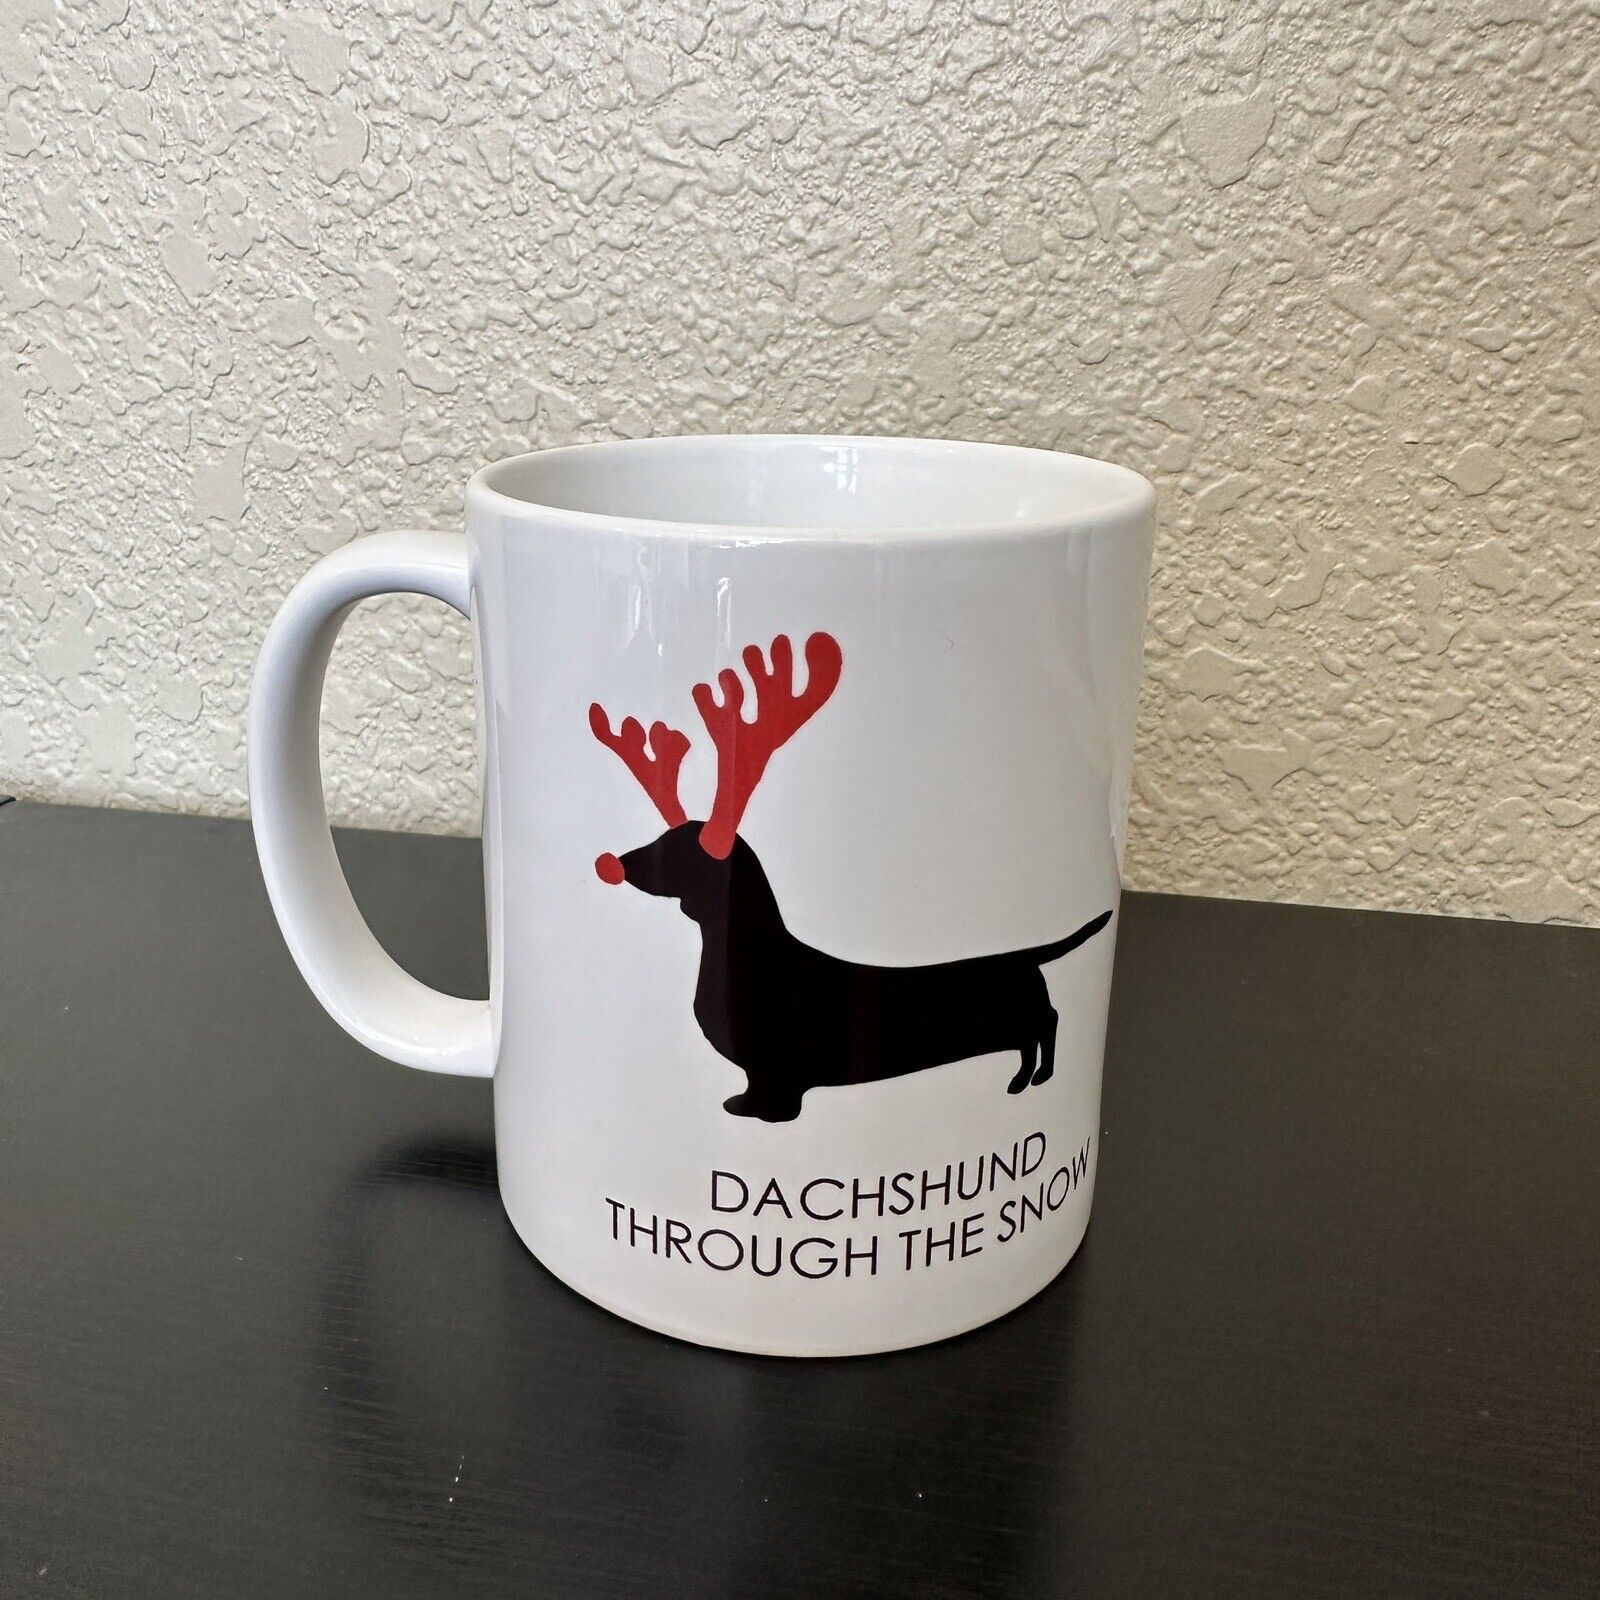 Dachshund Through The Snow Coffee Mug Dog With Reindeer Antlers Holiday Christma